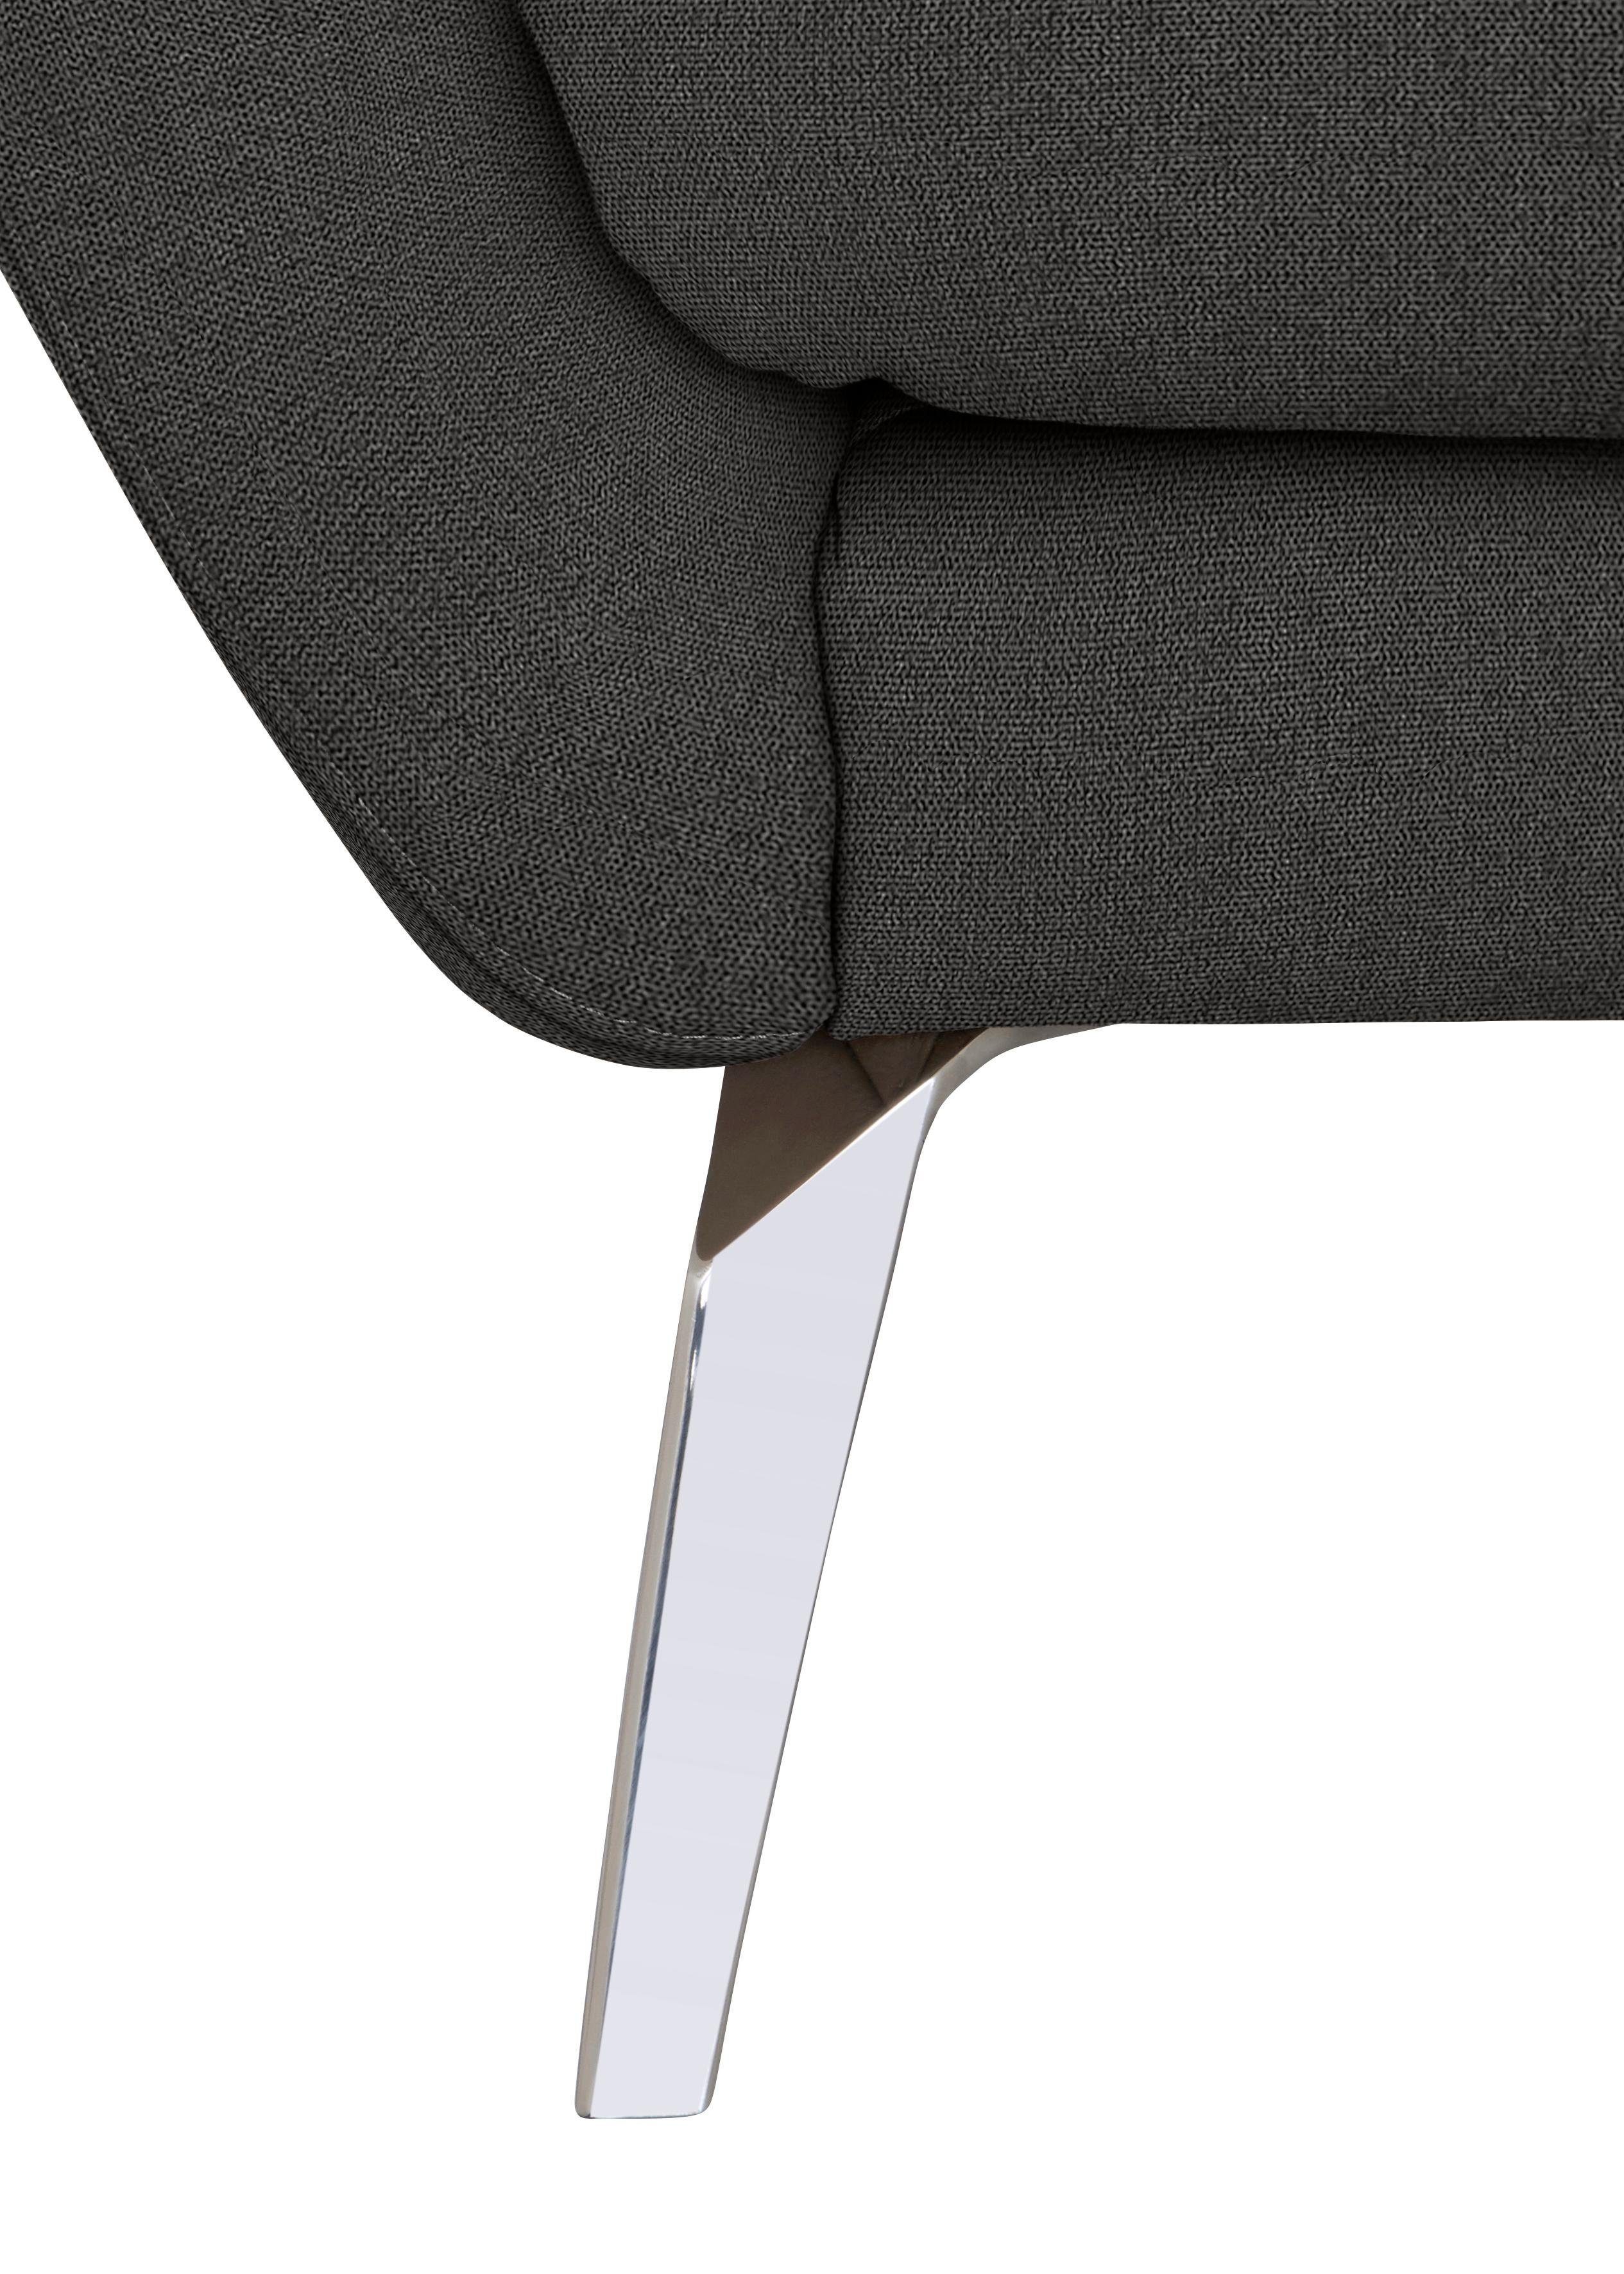 Big-Sofa glänzend Heftung W.SCHILLIG Füße mit dekorativer softy, Chrom im Sitz,